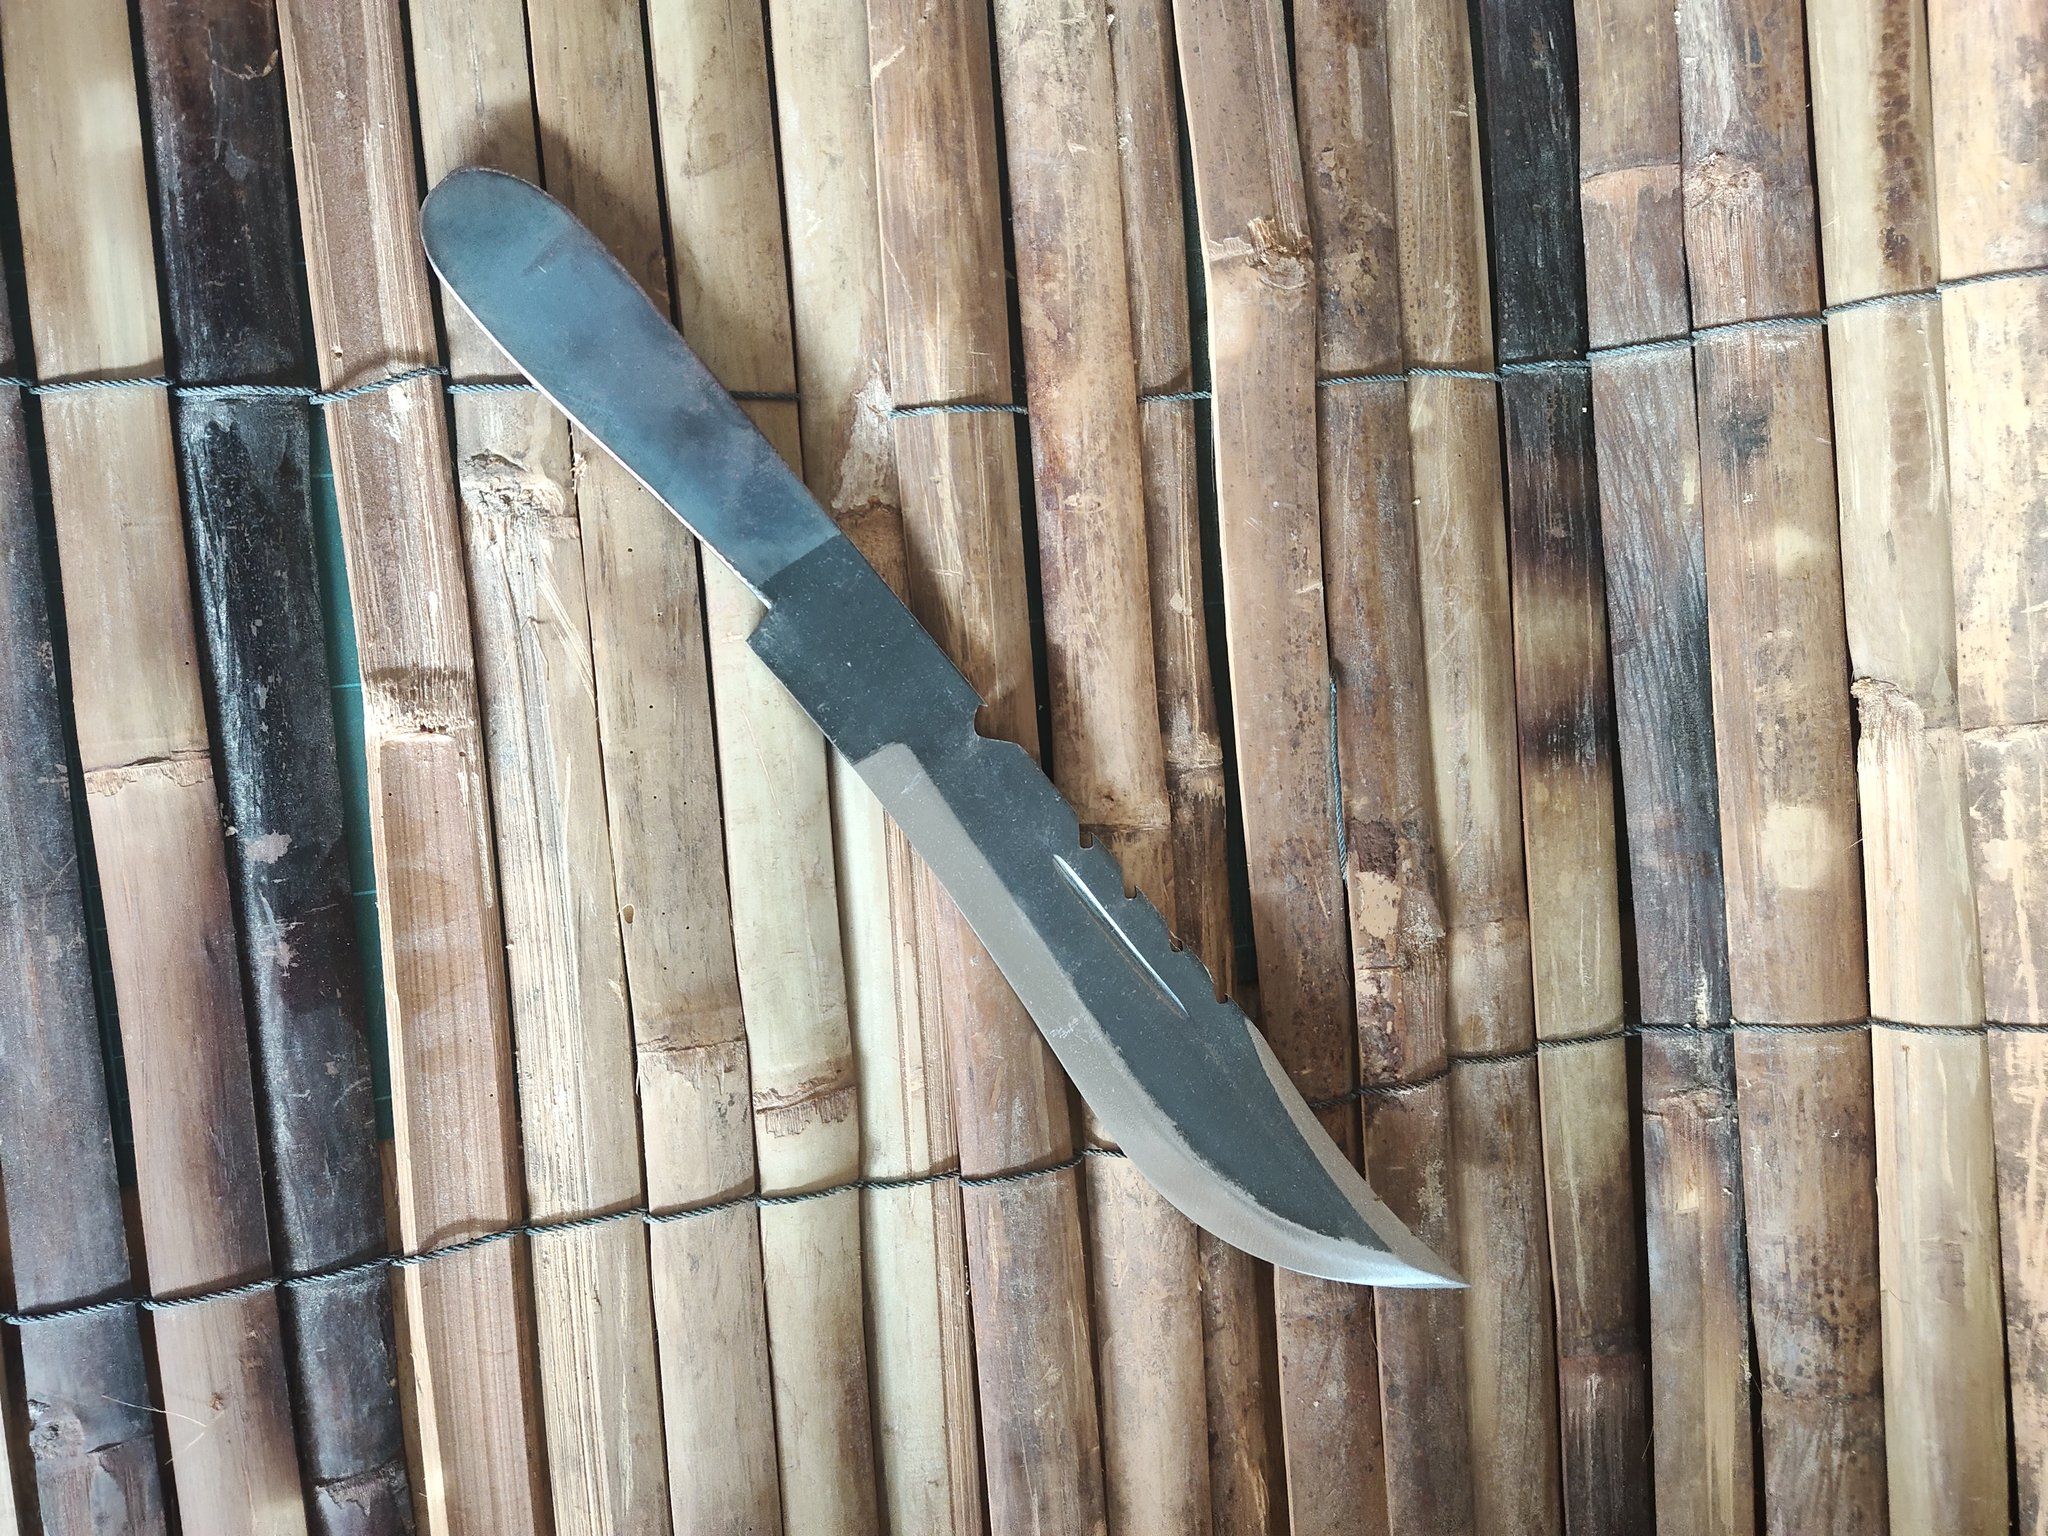 Set of 3 Thai Throwing Knives